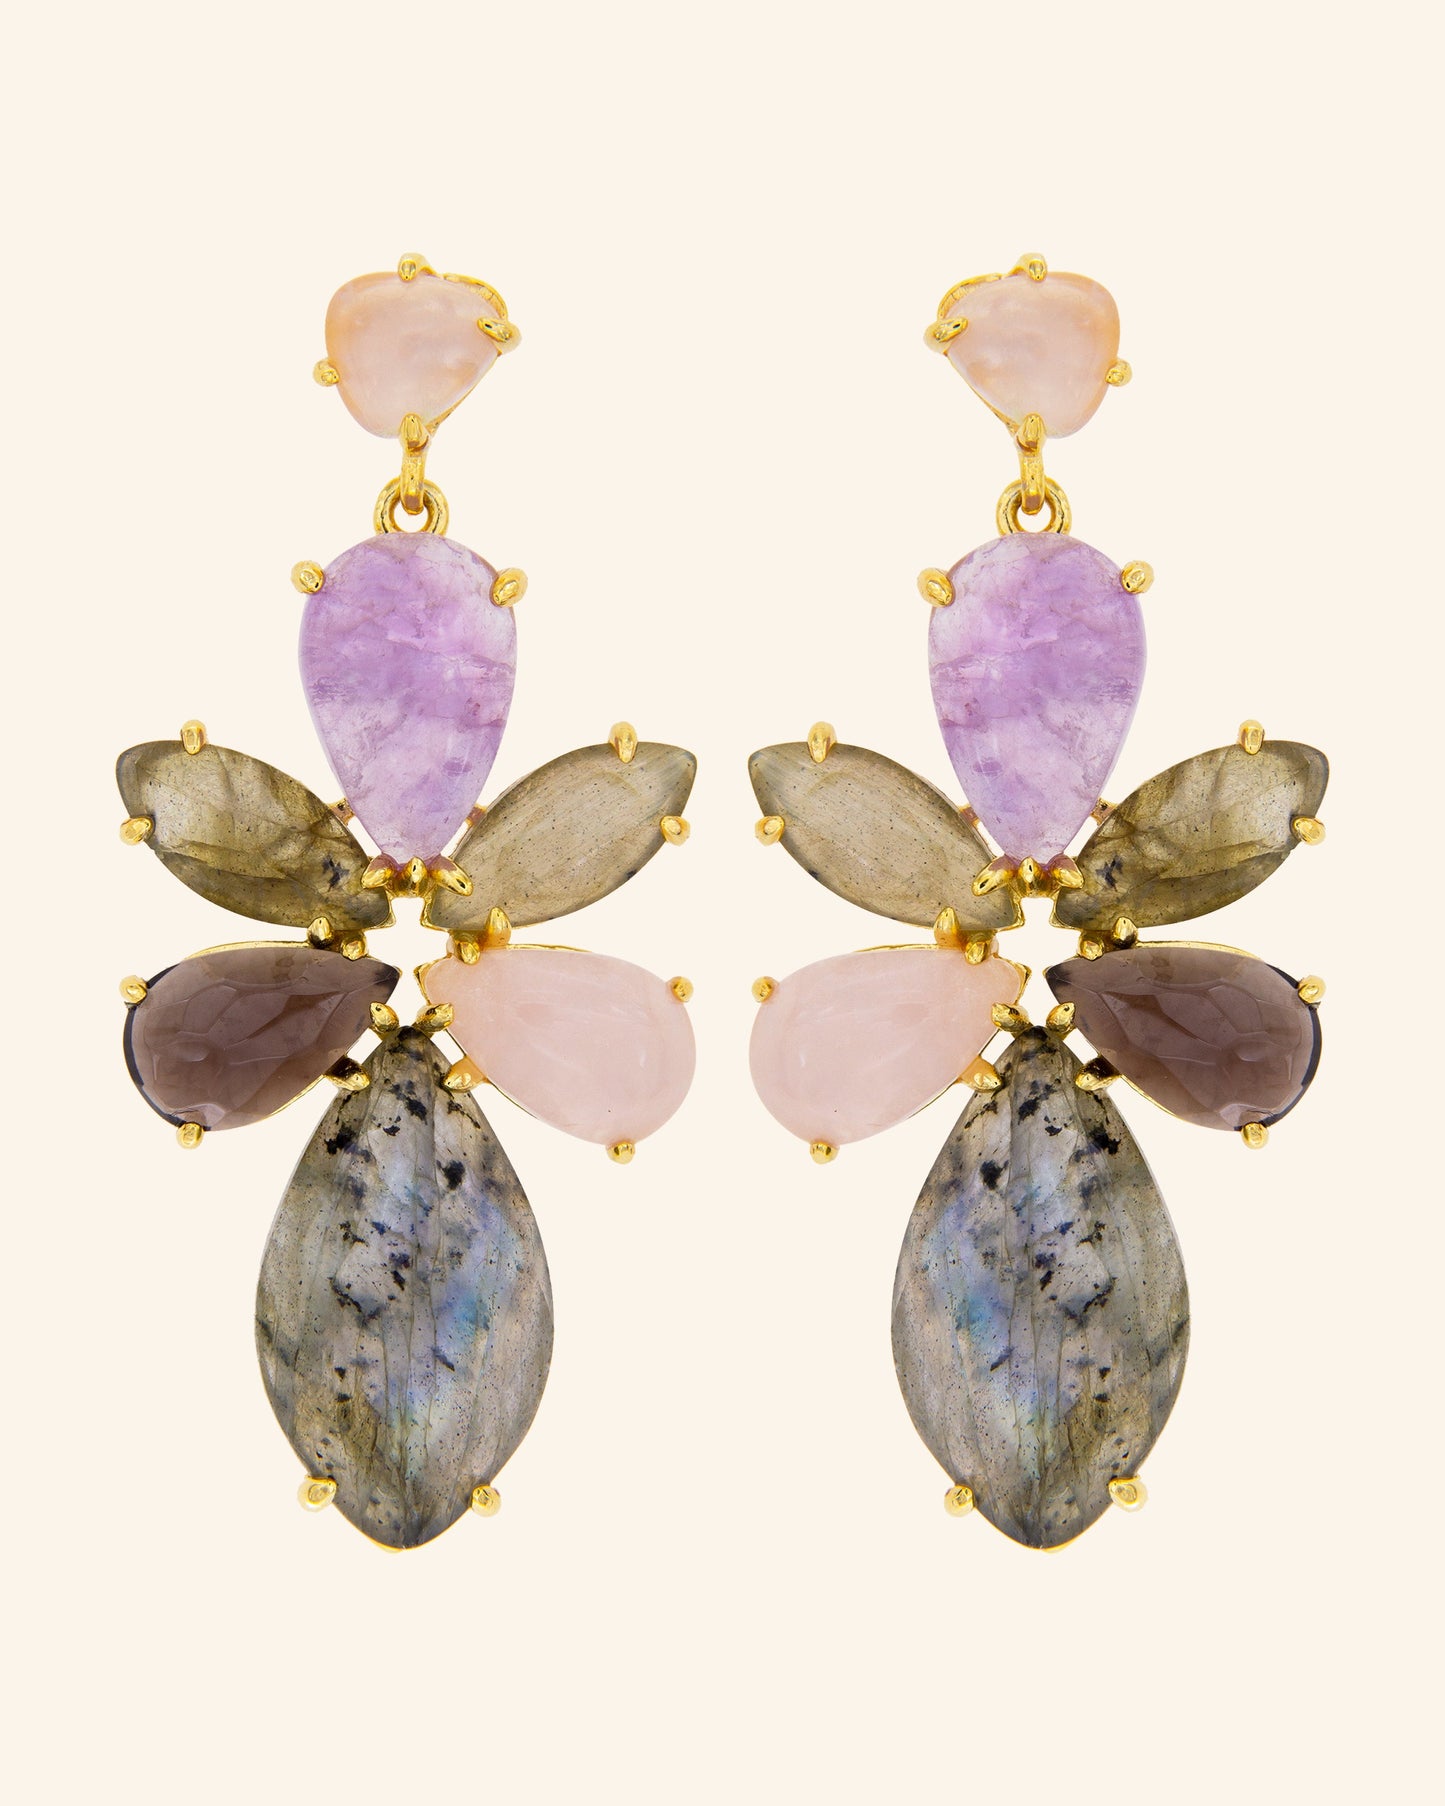 Fauno earrings with labradorite, amethyst, rose quartz and smoke